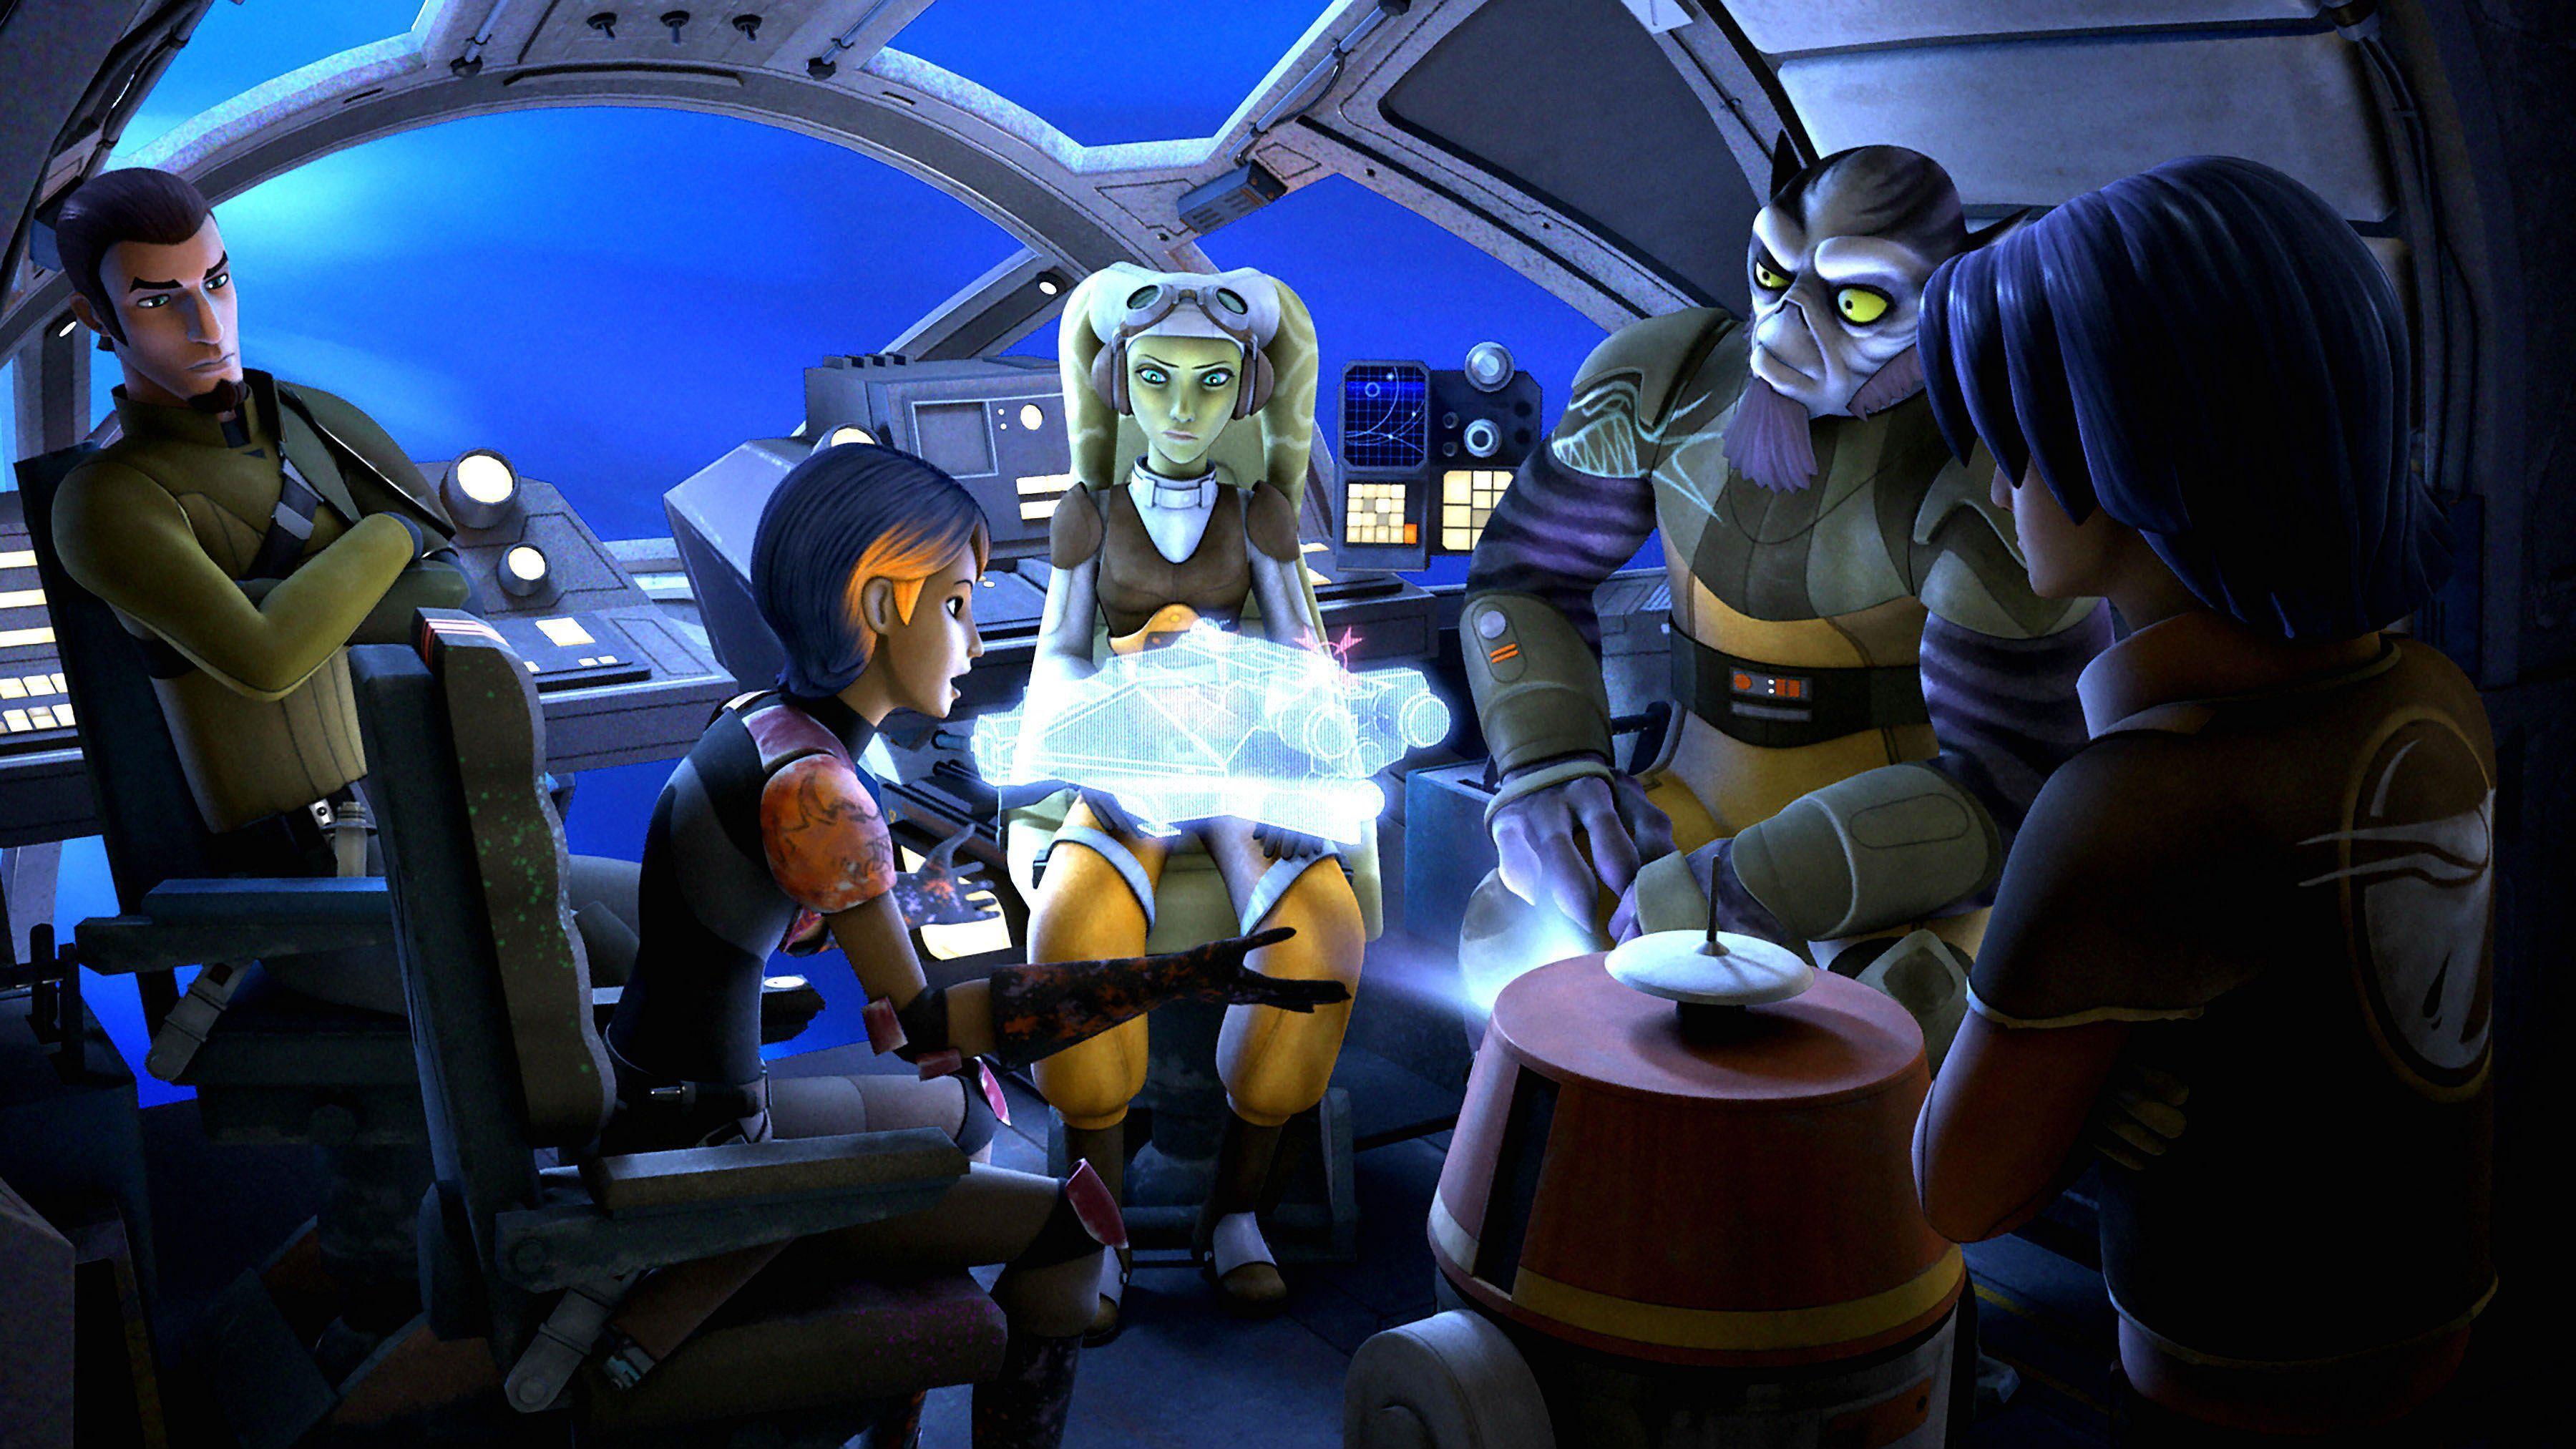 Star Wars Rebels Desktop Background Picture to